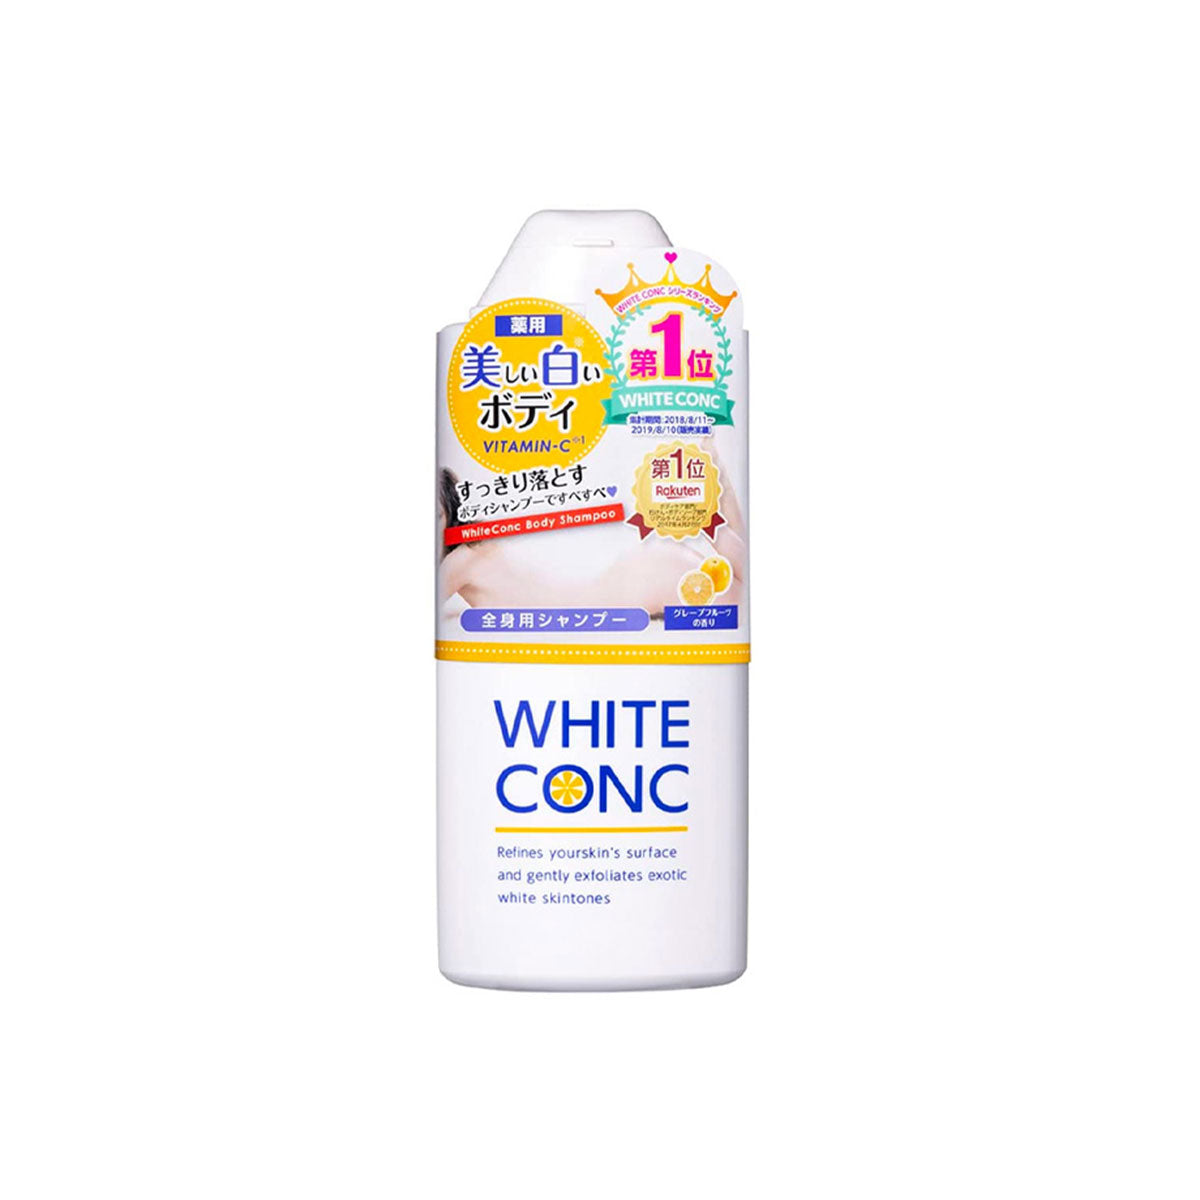 WHITE CONC Body Shampoo C II 360ml